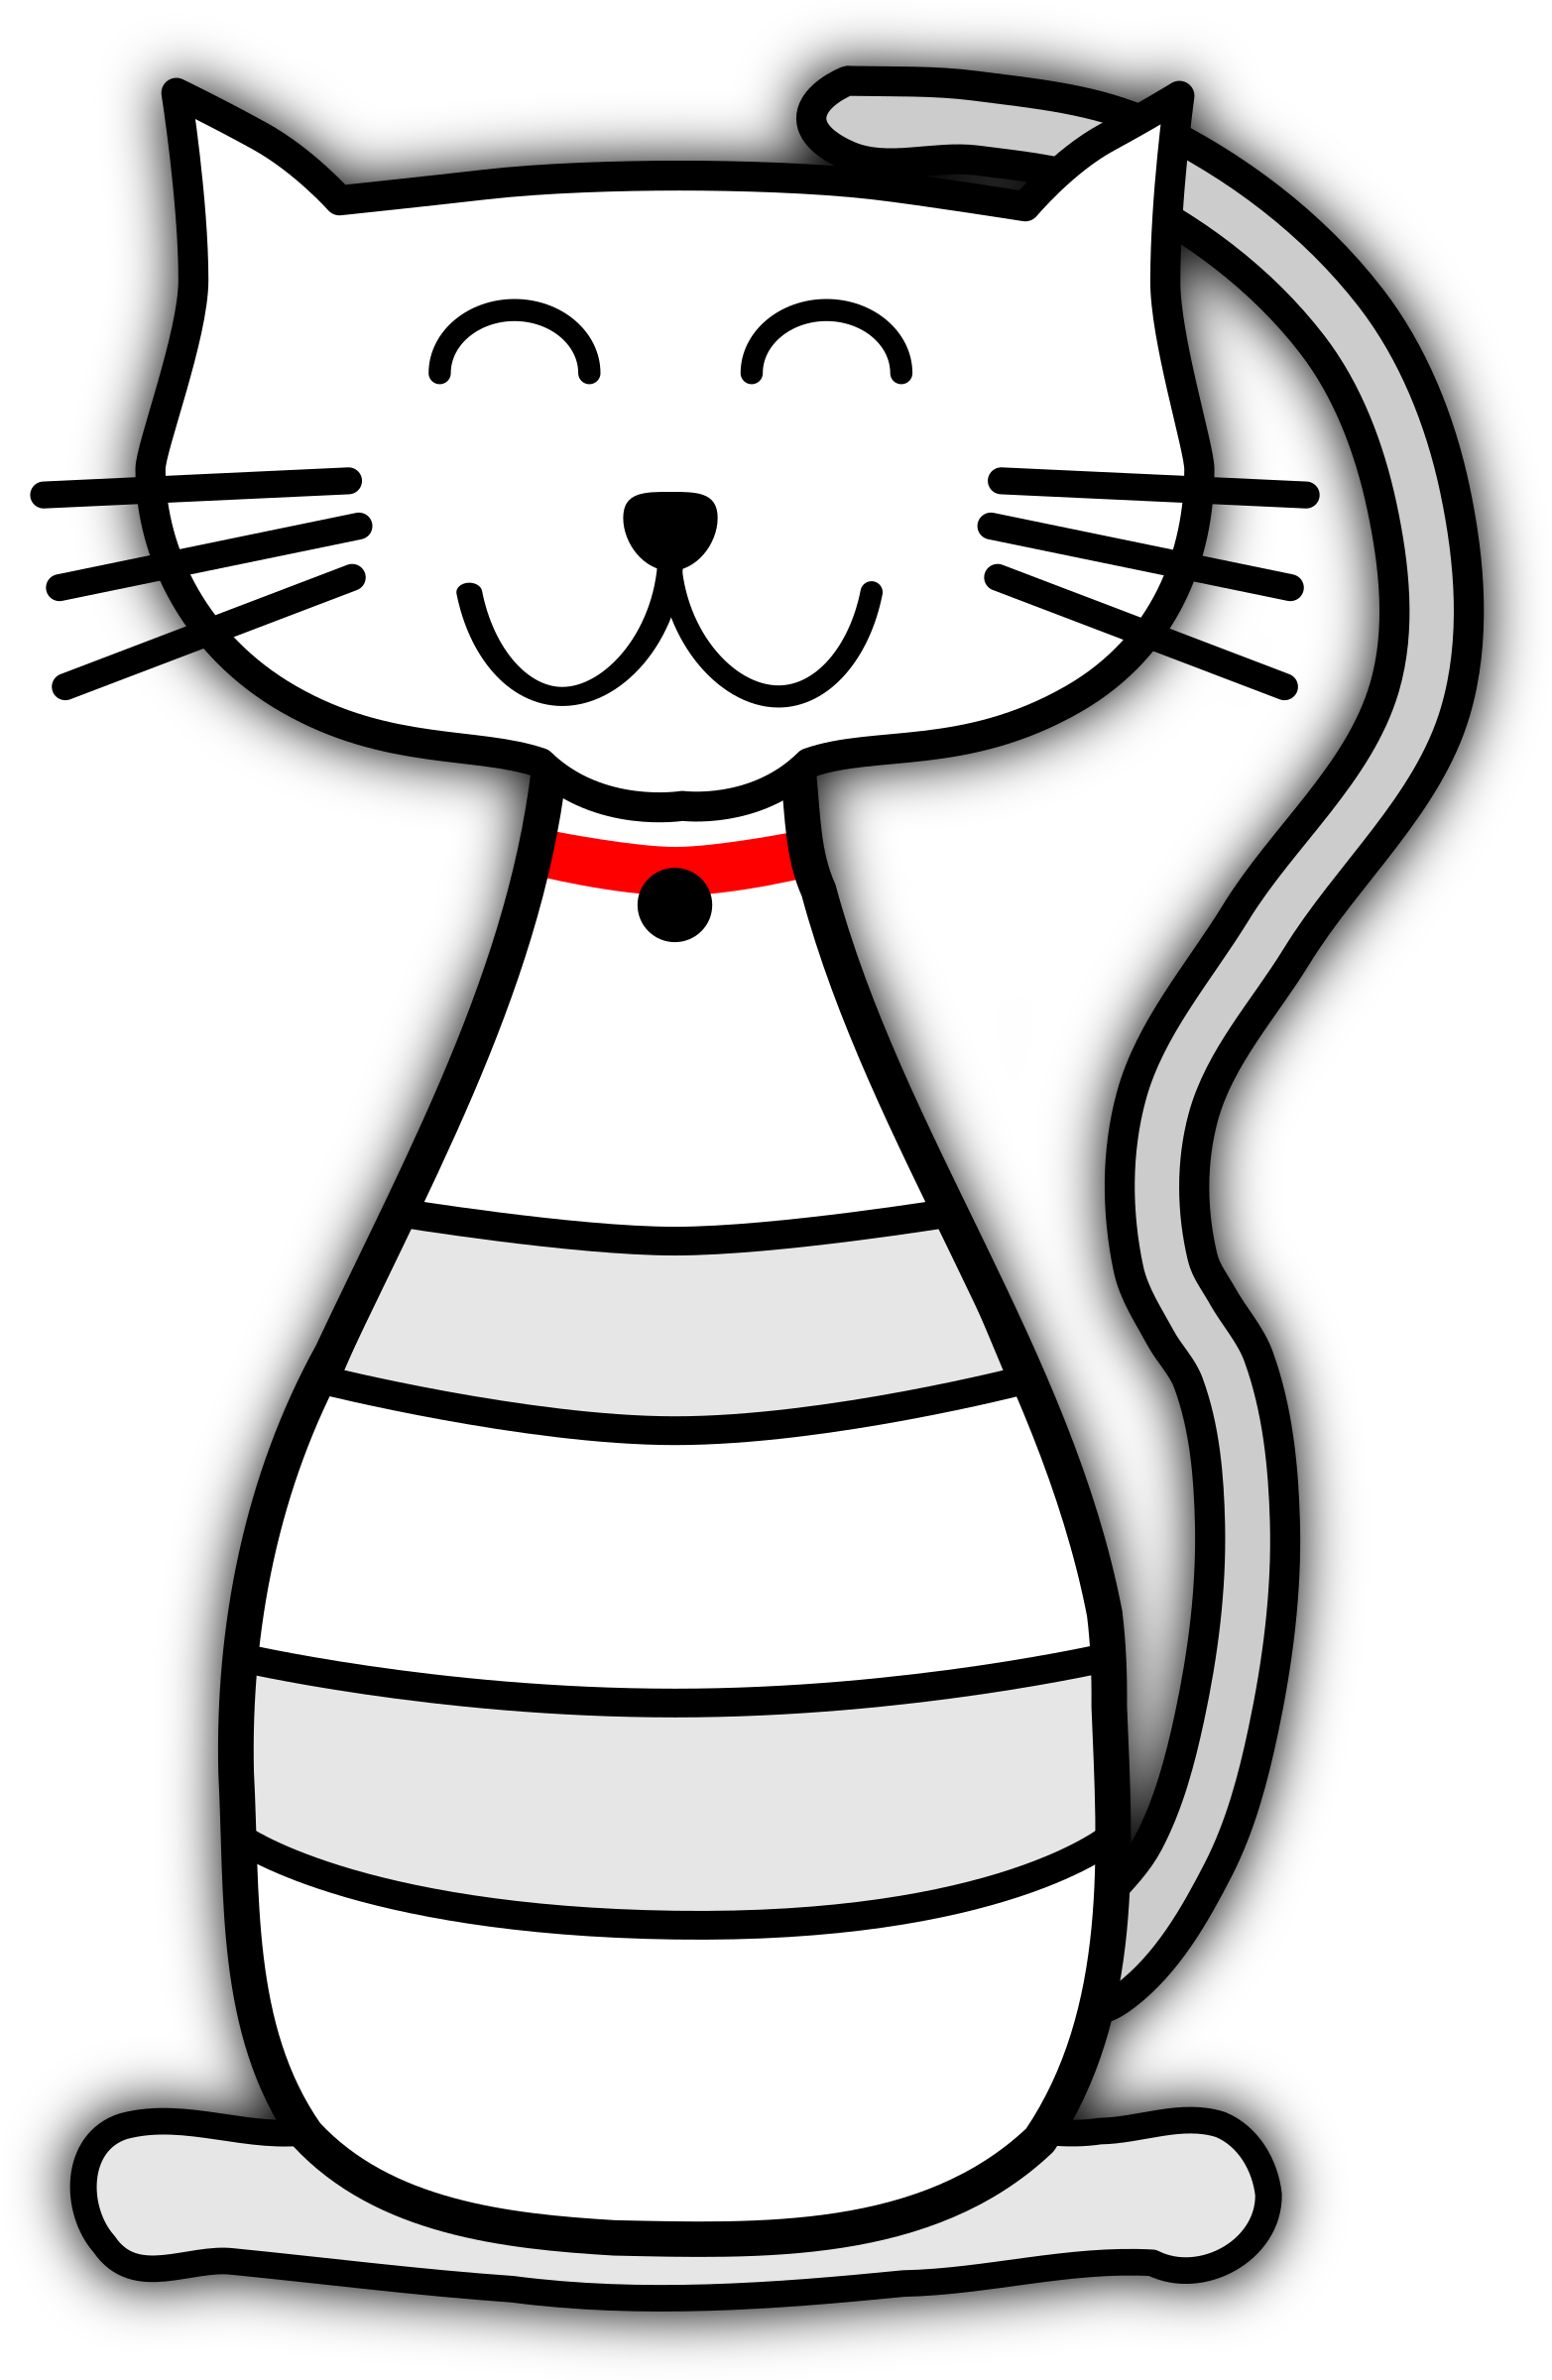 Big Image - Cat Cartoon Public Domain (1565x2400)